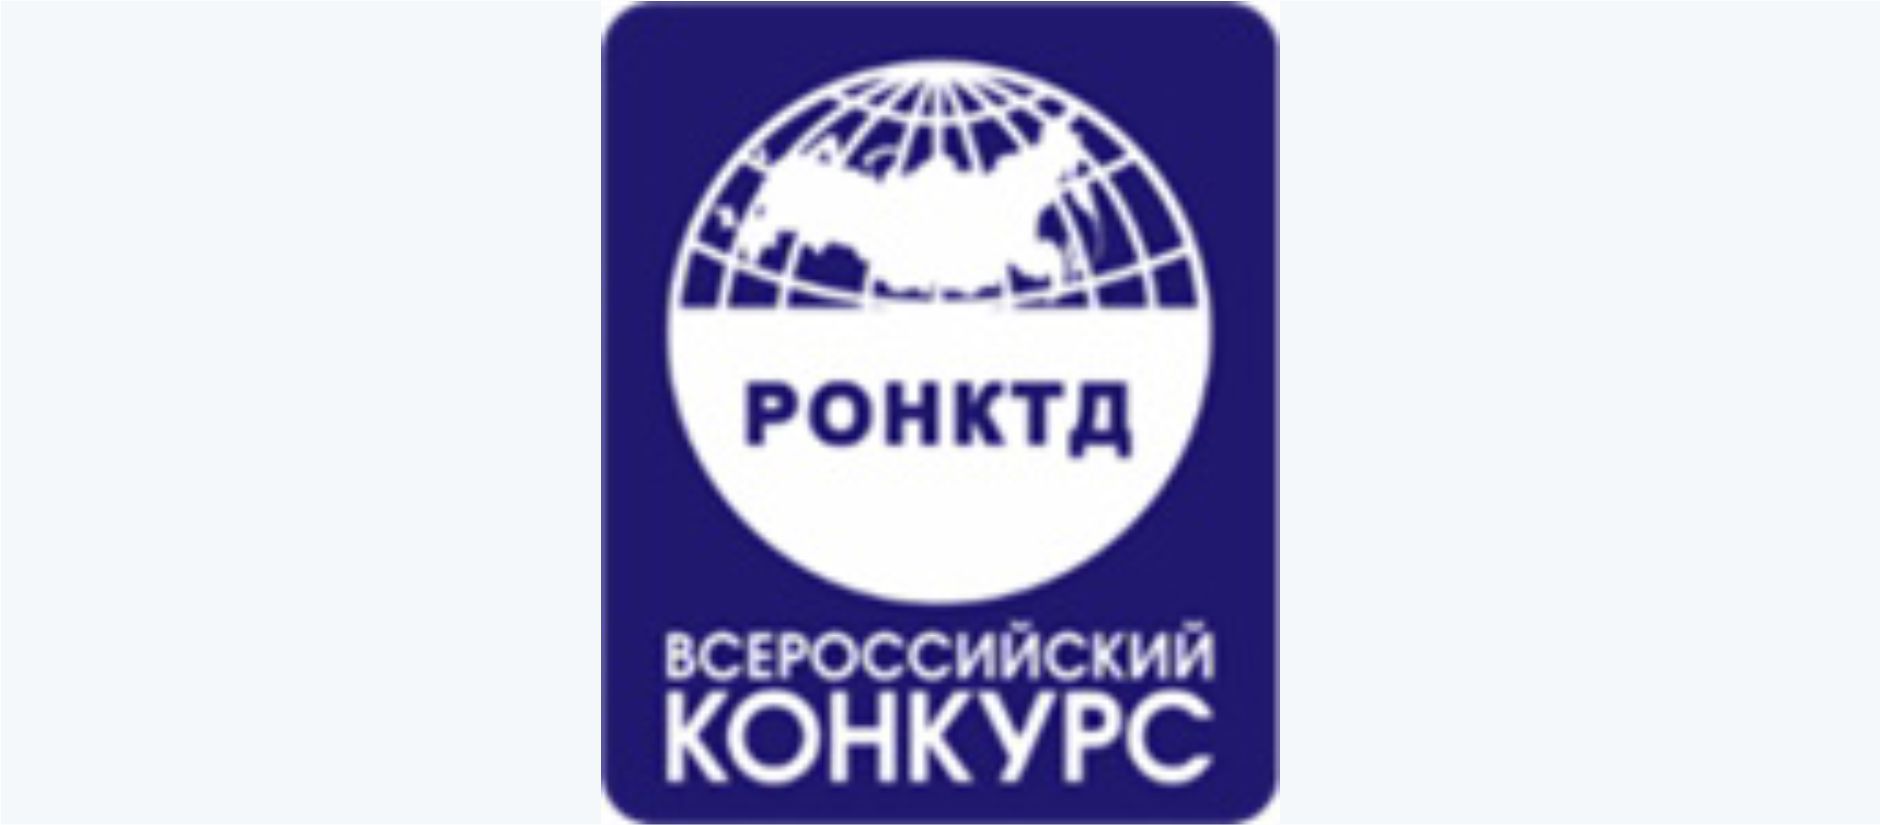 Final of the Non-Destructive Testing Competition " Non-Destructive Testing Technician 2022» organized by the Russian Society for Non-Destructive Testing and Technical Diagnostics (RSNTTD)